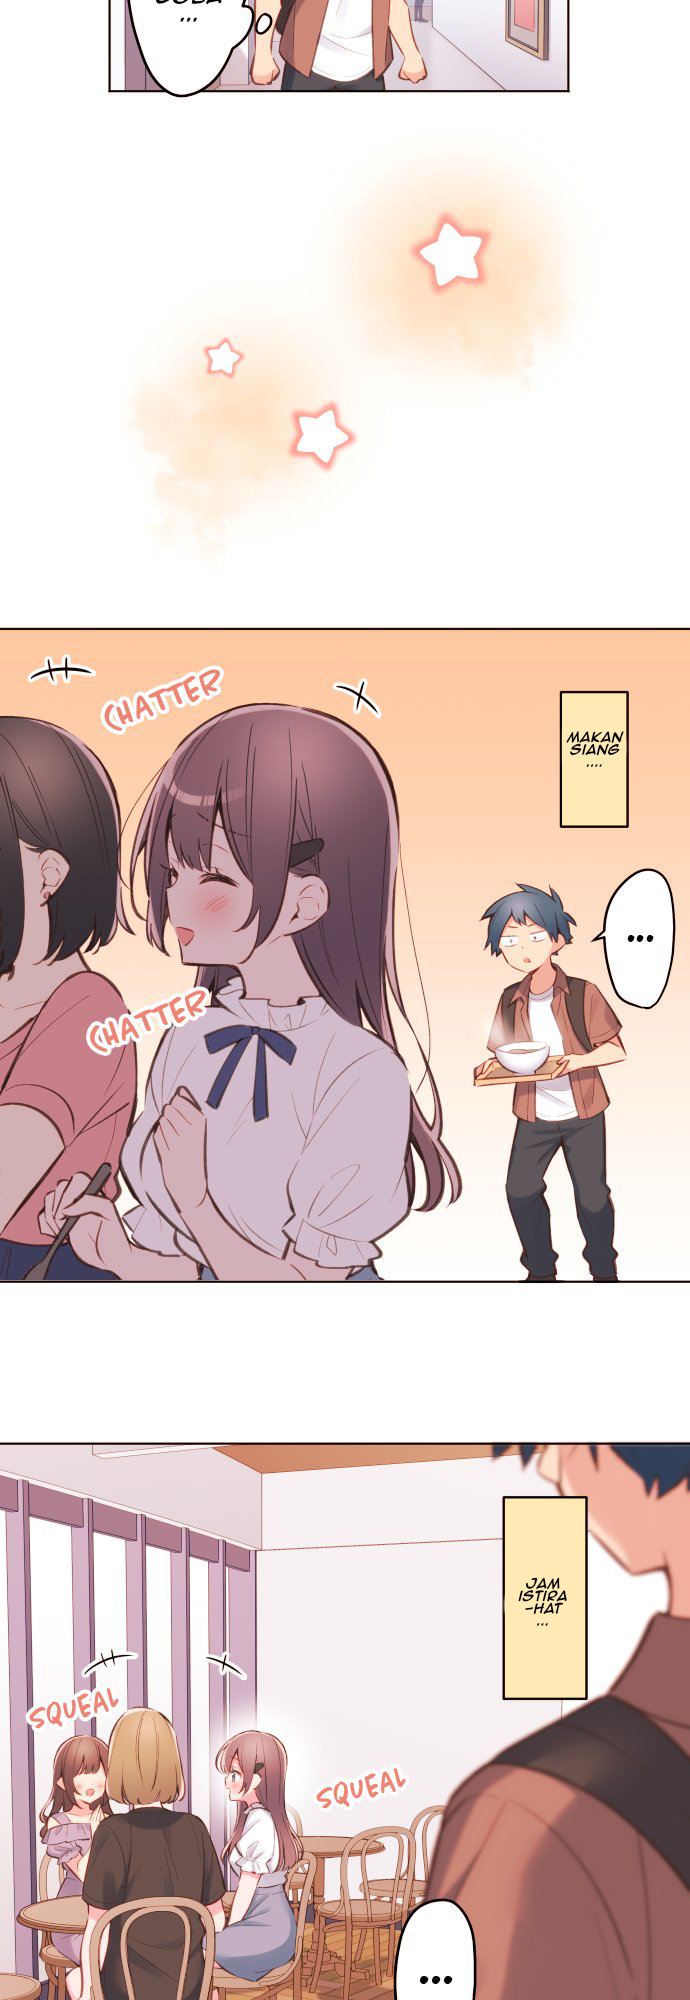 Waka-chan Is Flirty Again Chapter 34 19